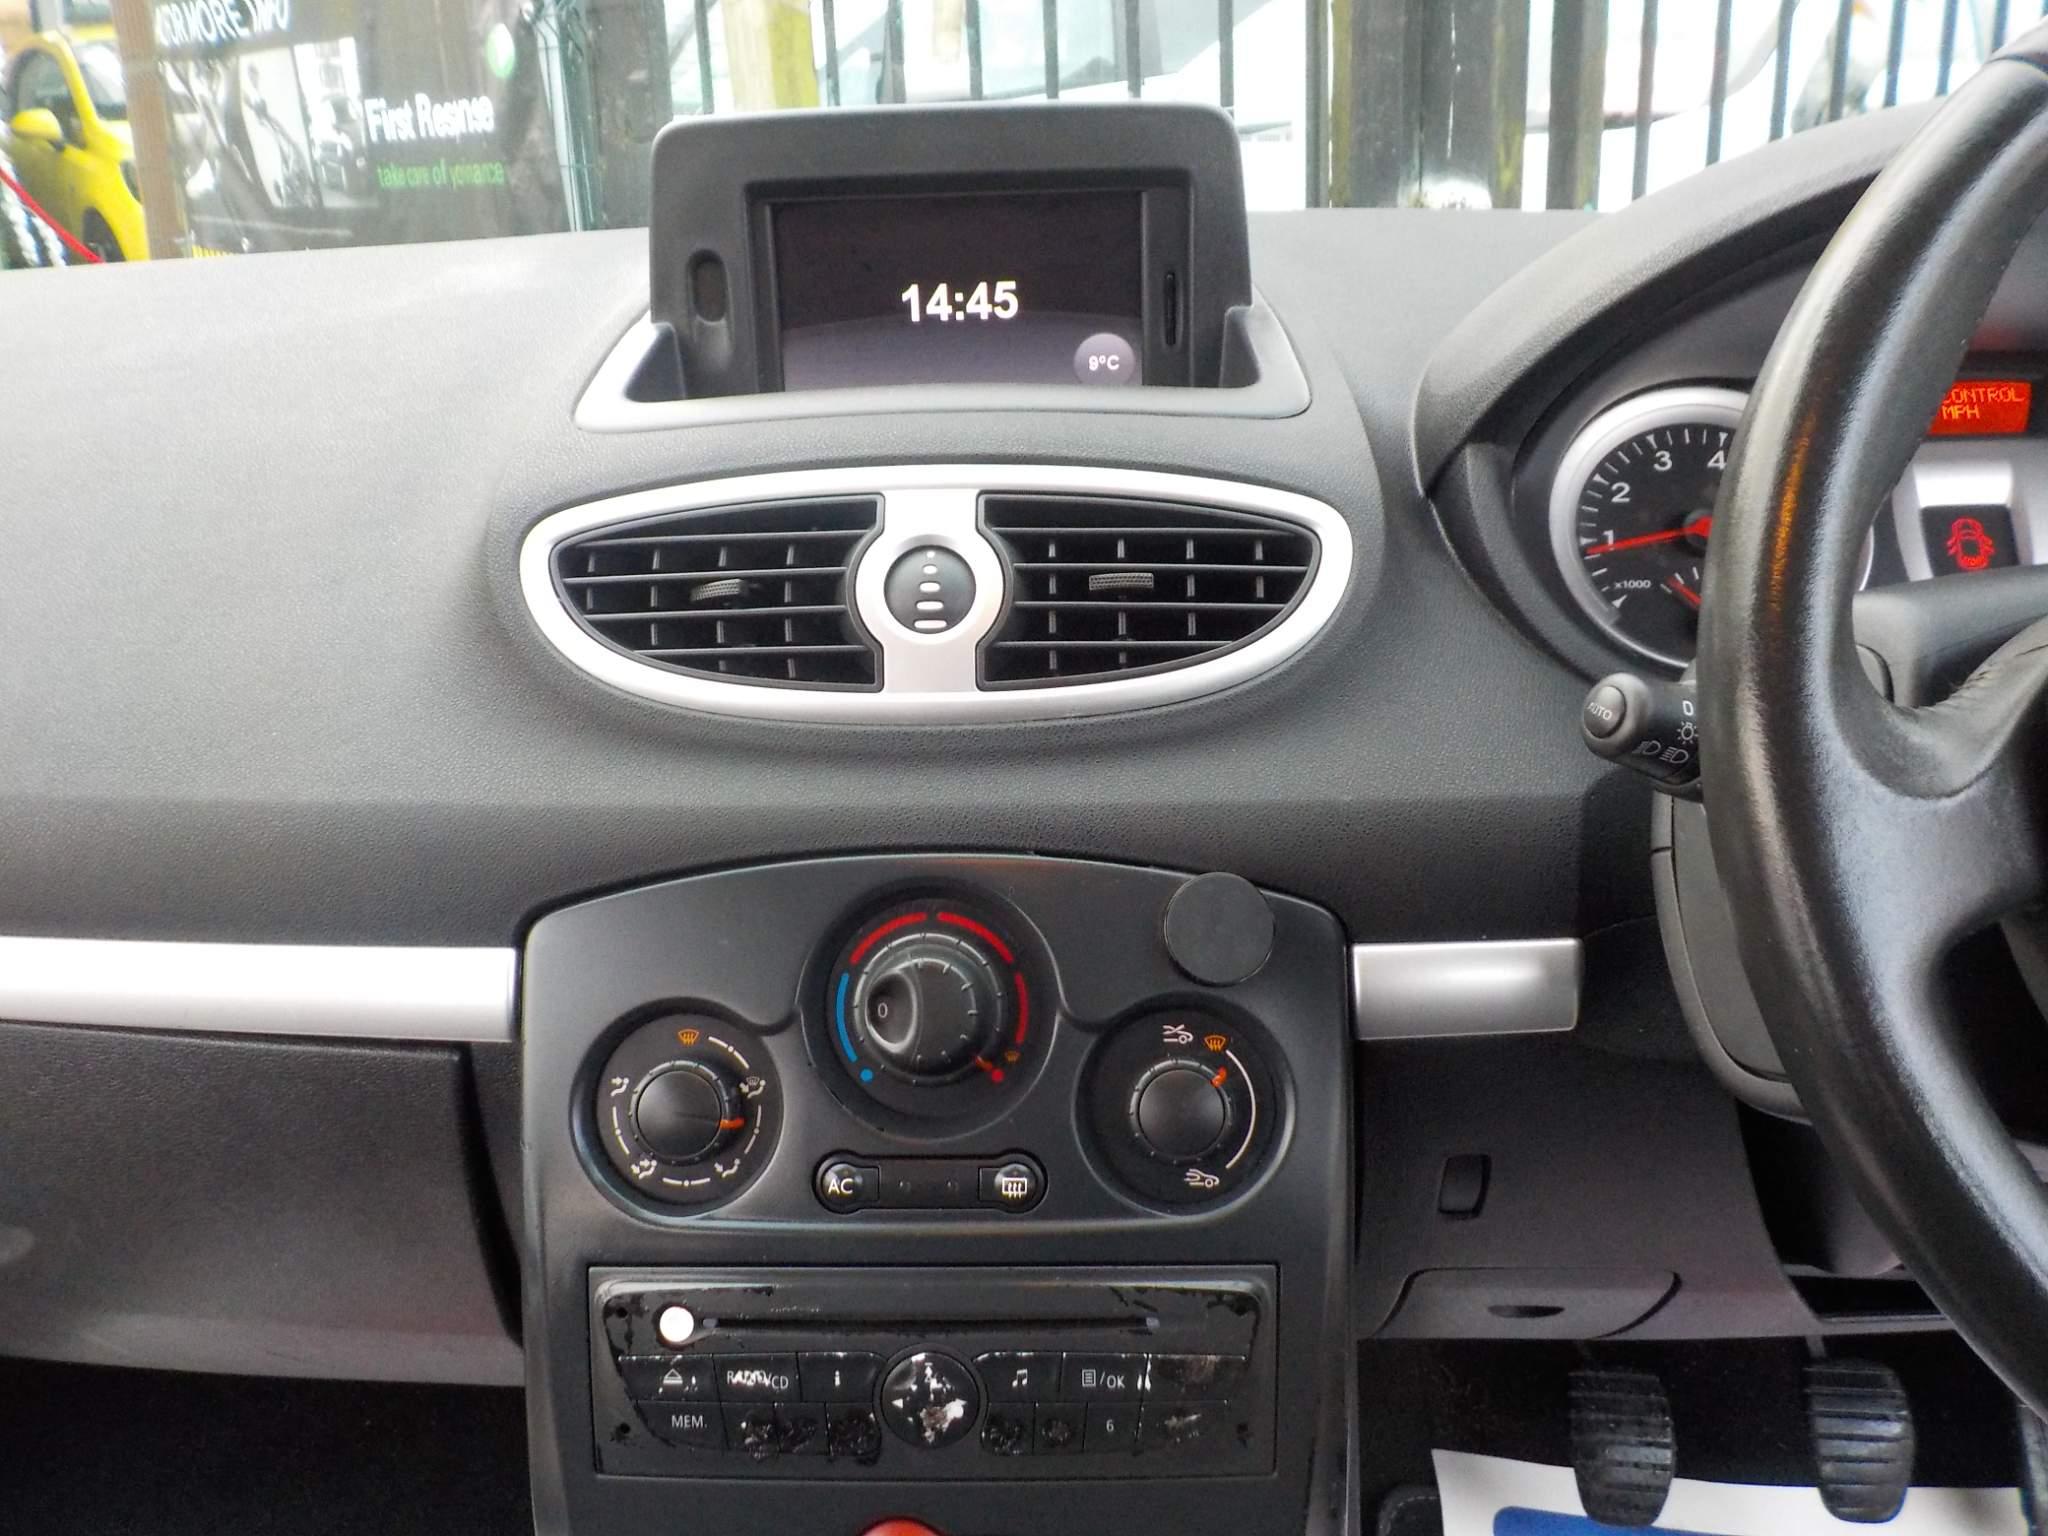 Renault Clio 1.2 Dynamique TomTom Euro 4 5dr